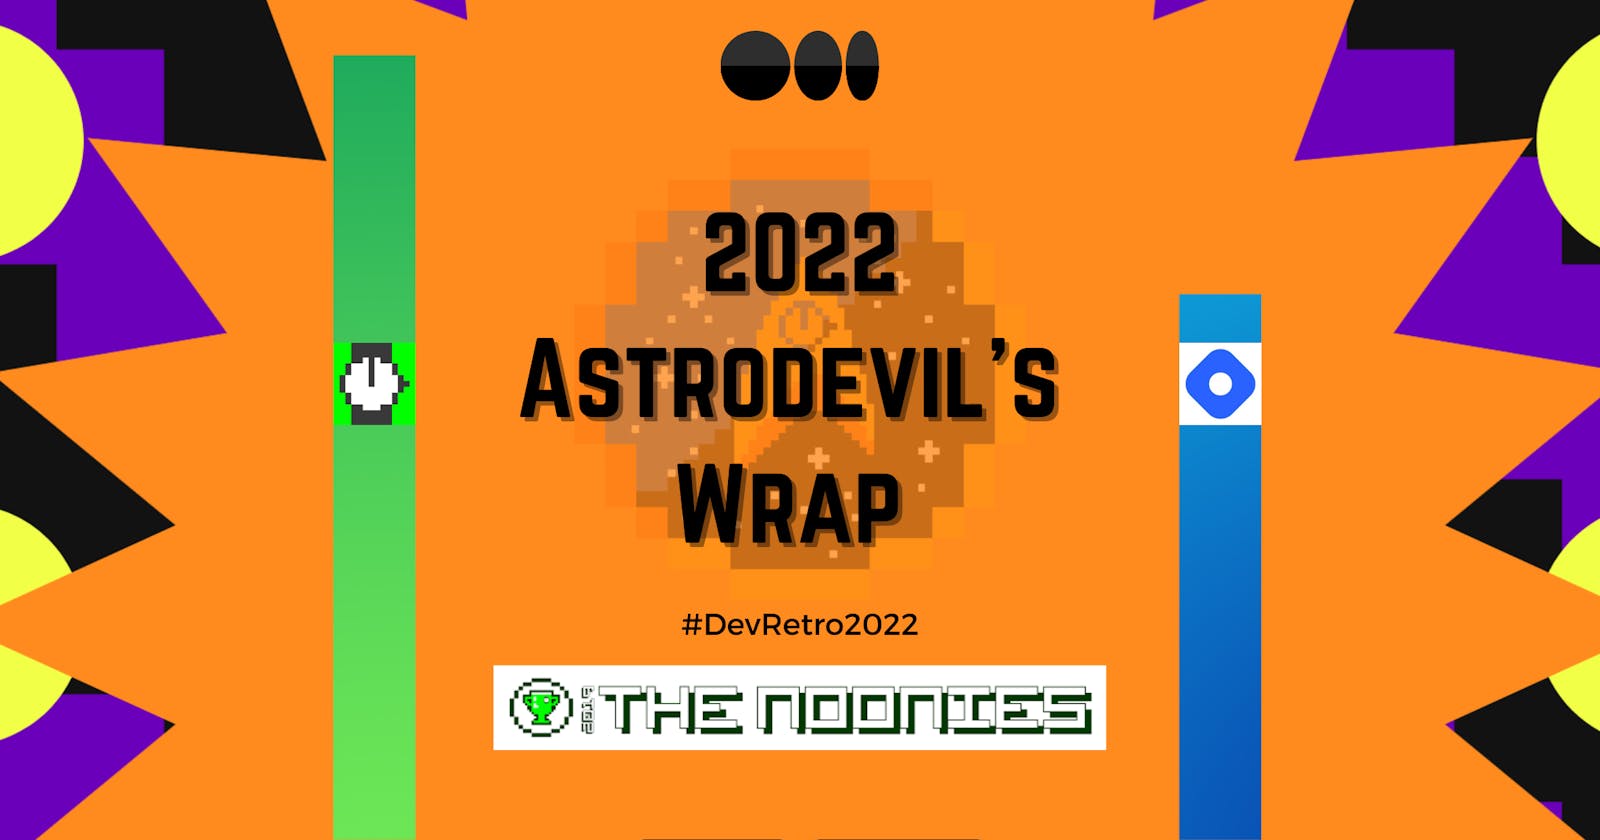 Astrodevil's 2022 Wrapped "Dev Retro 2022"